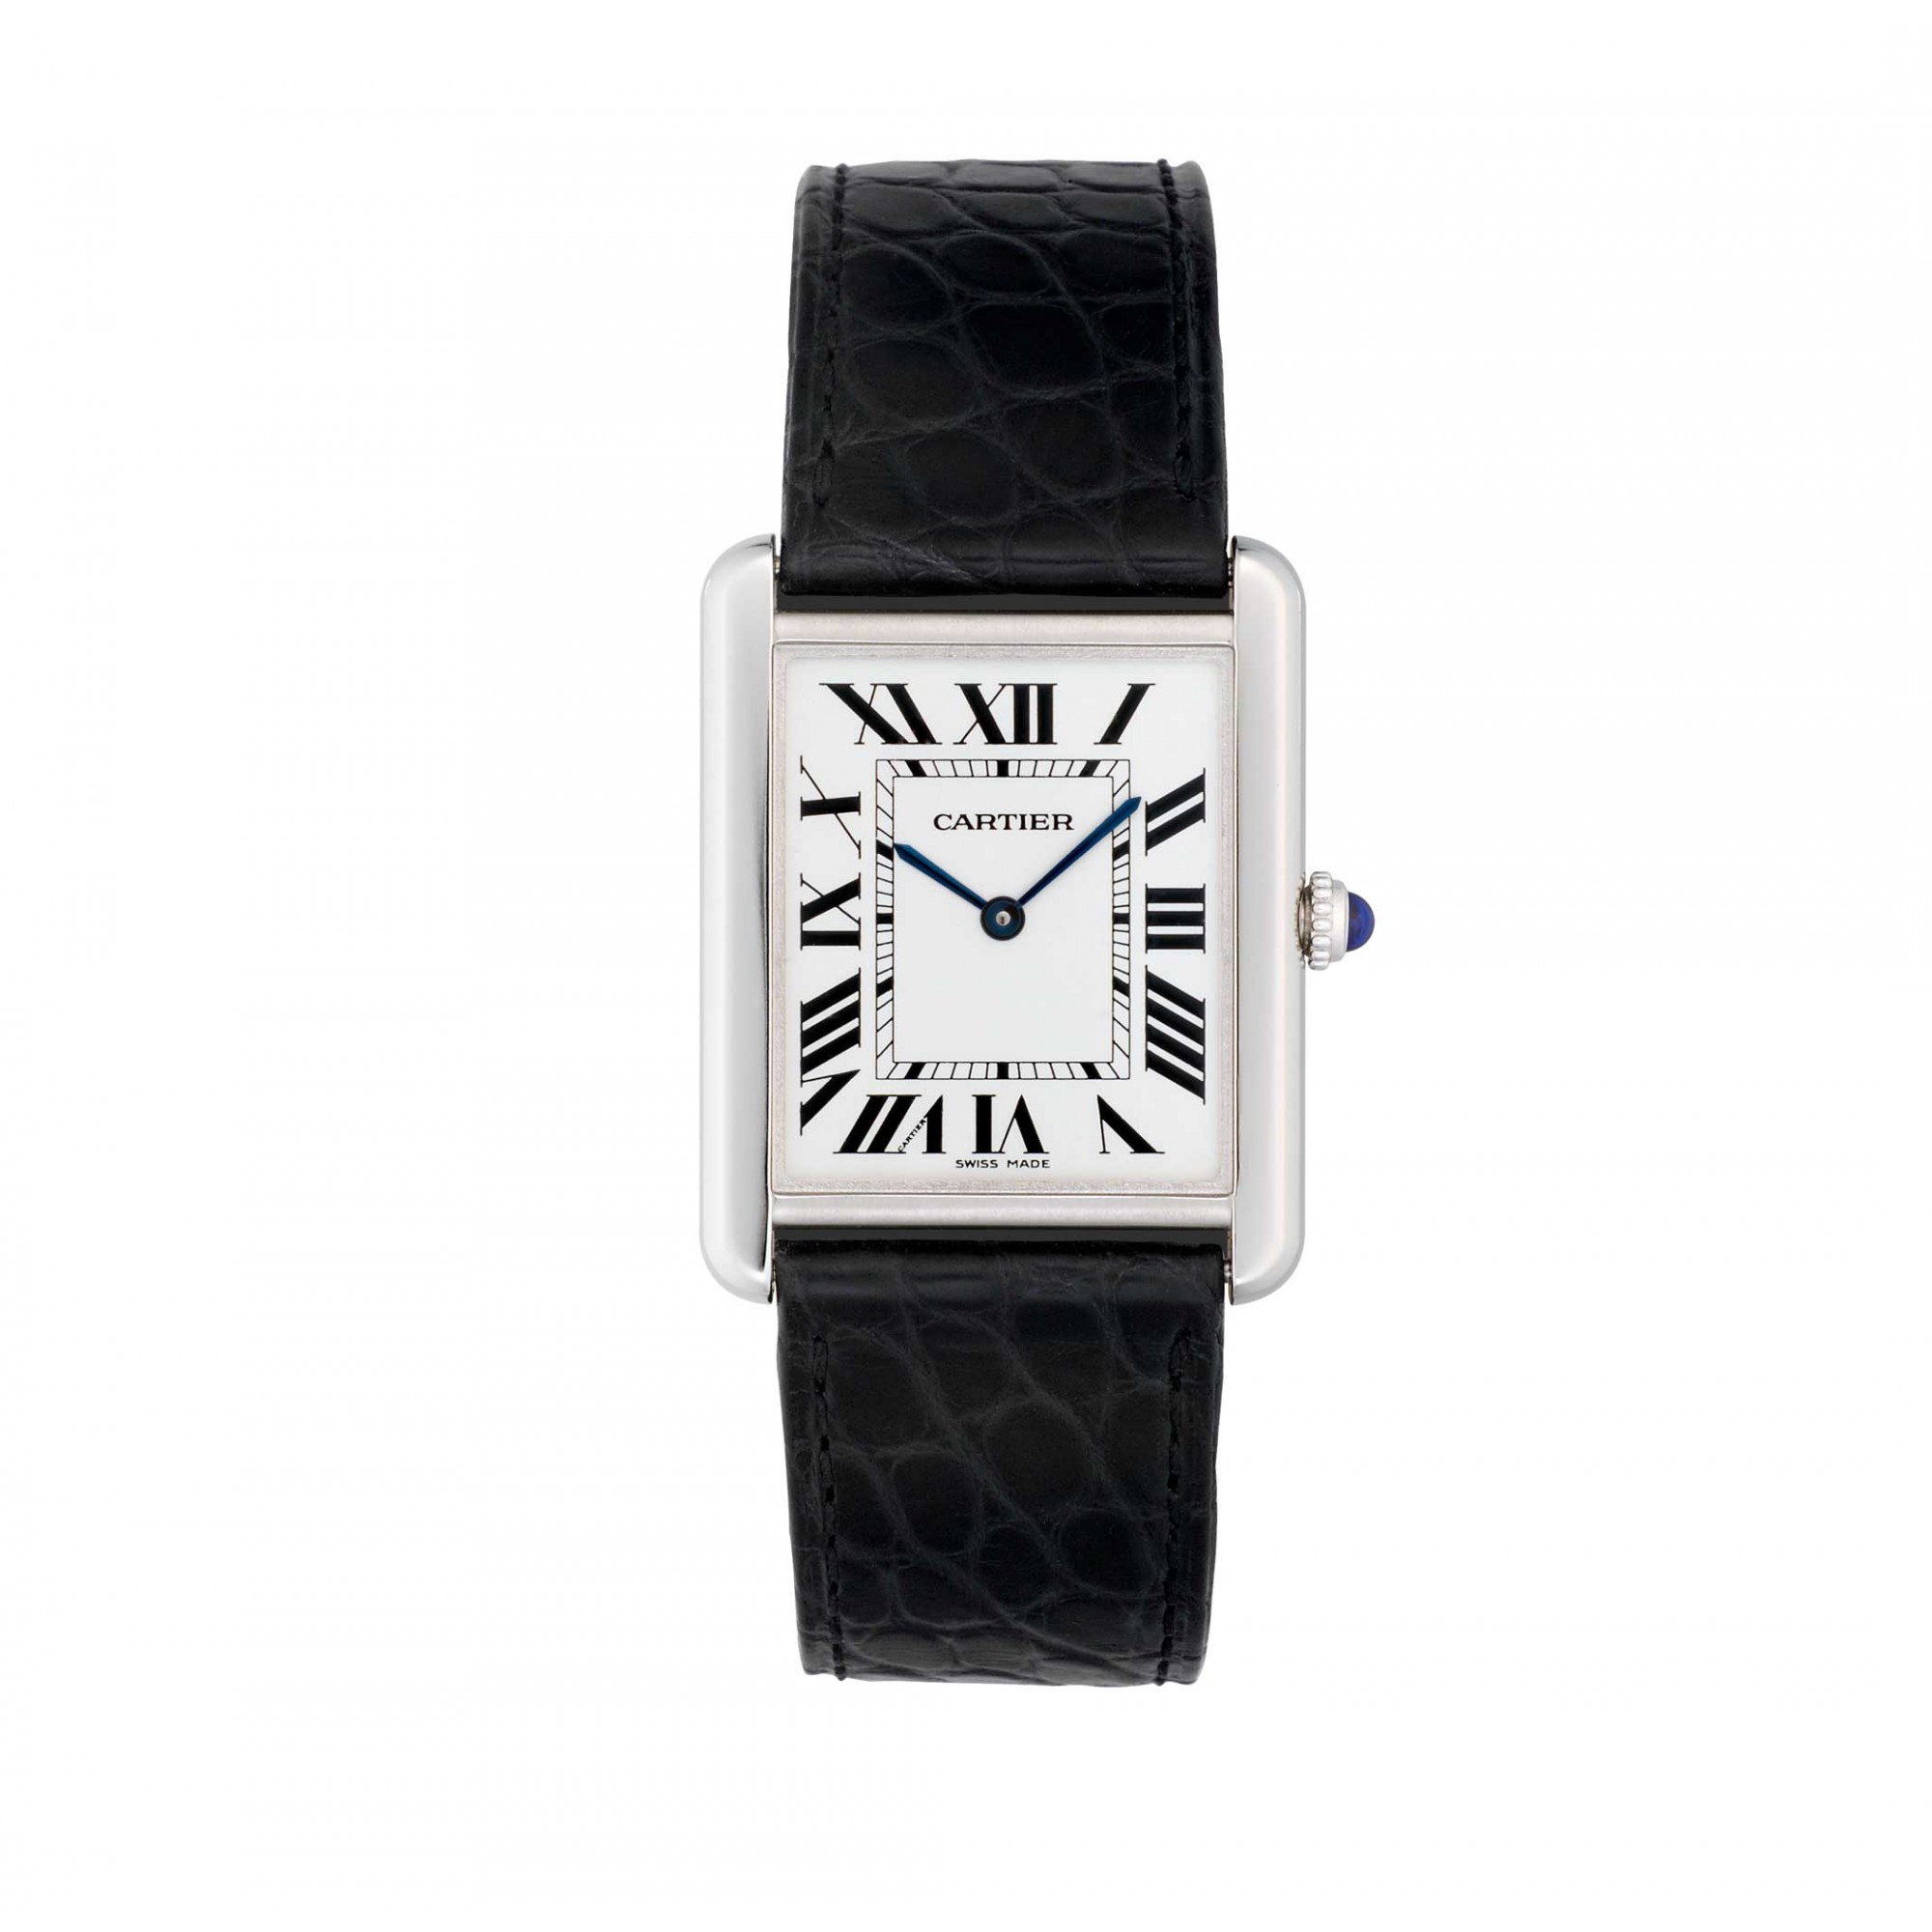 Cartier Tank replica watch